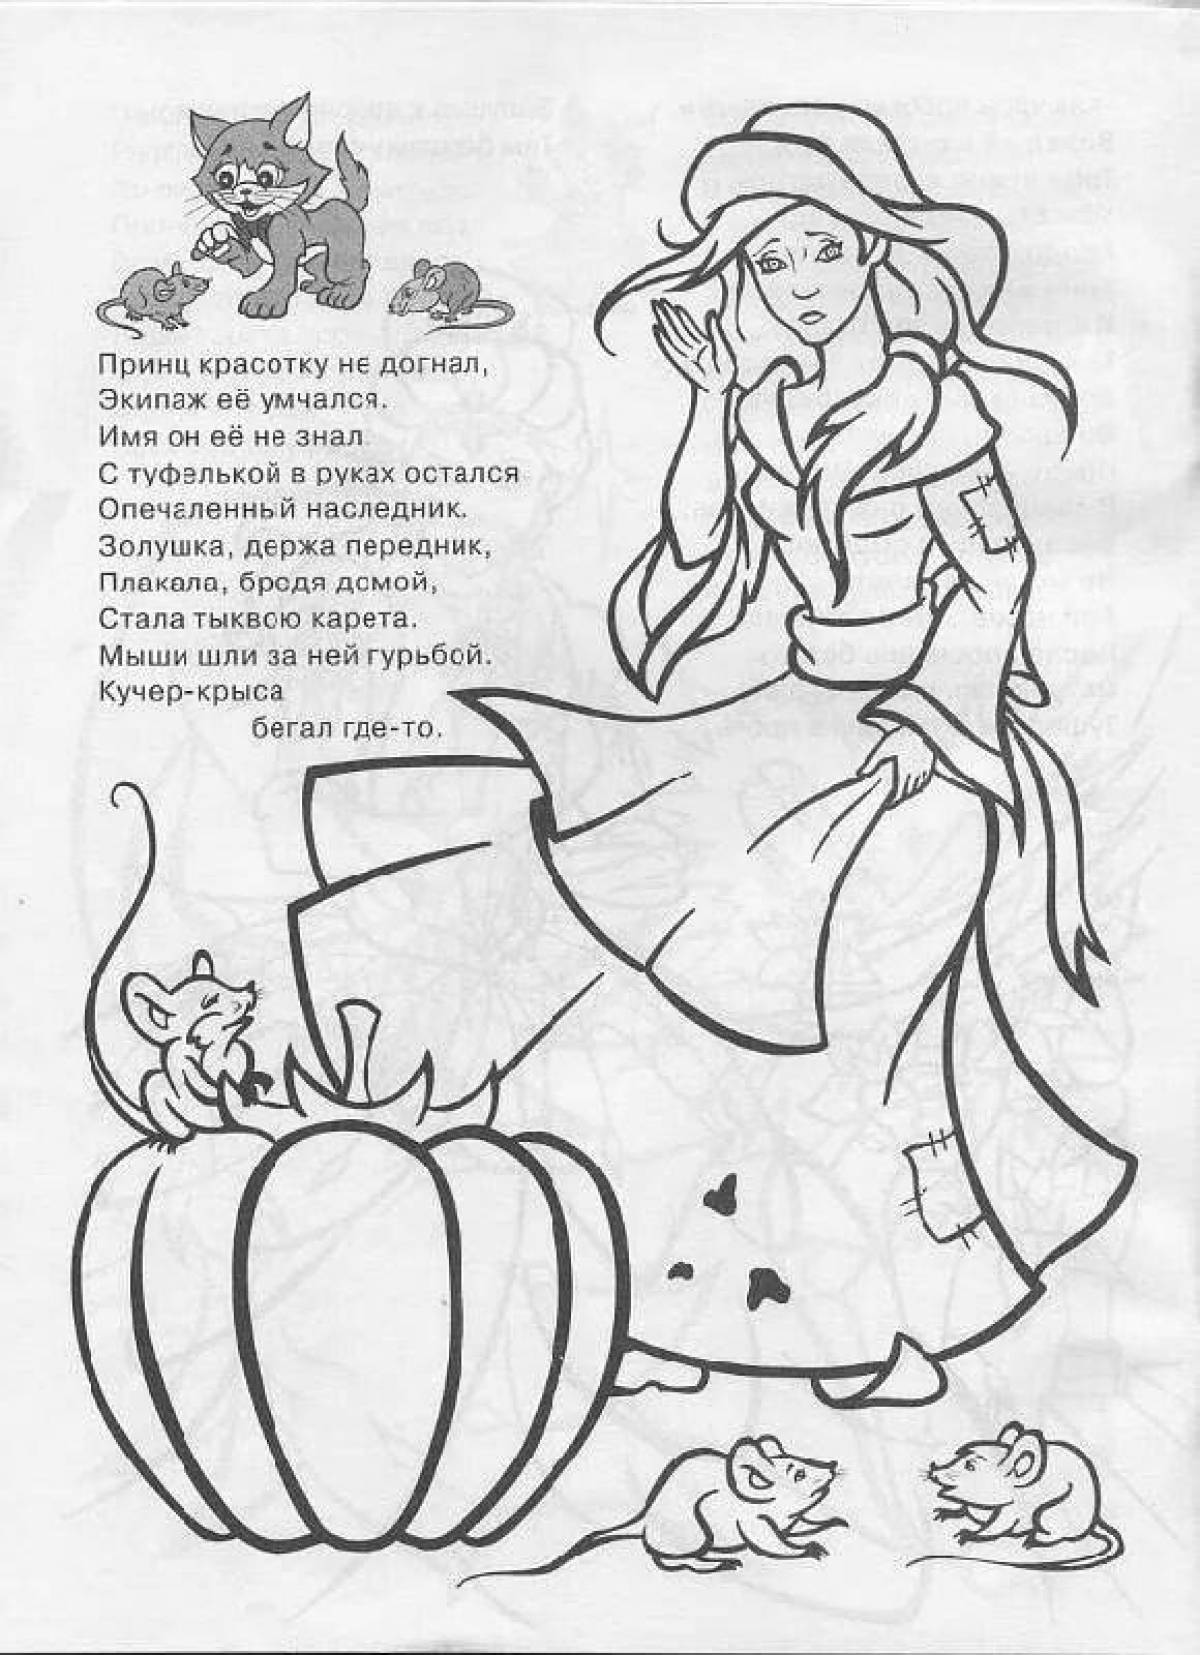 Brilliant Cinderella and Charles Perrault coloring book